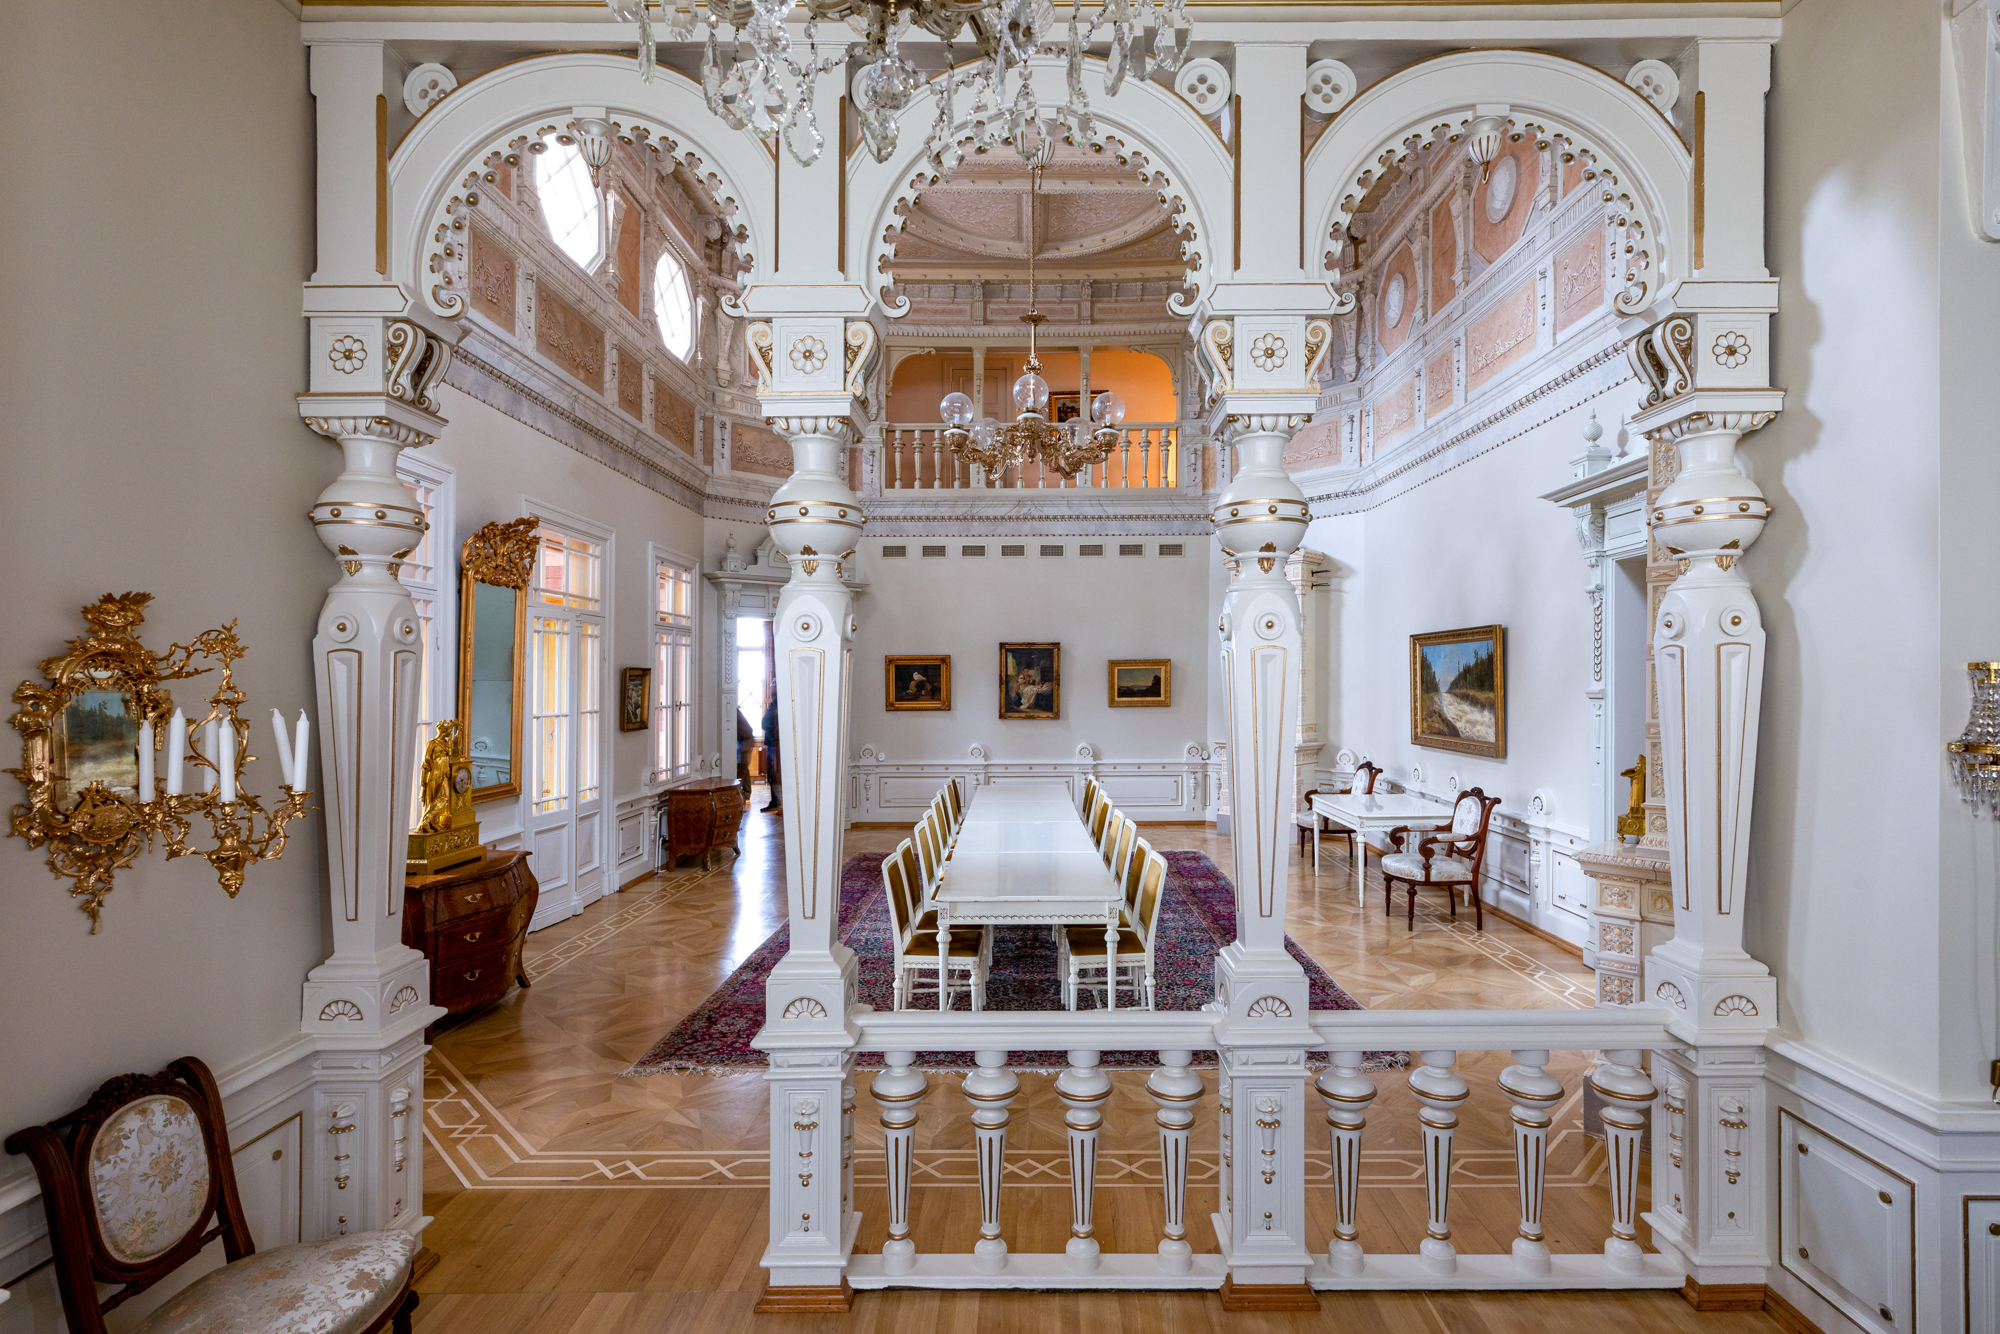 Interior image of the carefully restored Rauhalinna Castle